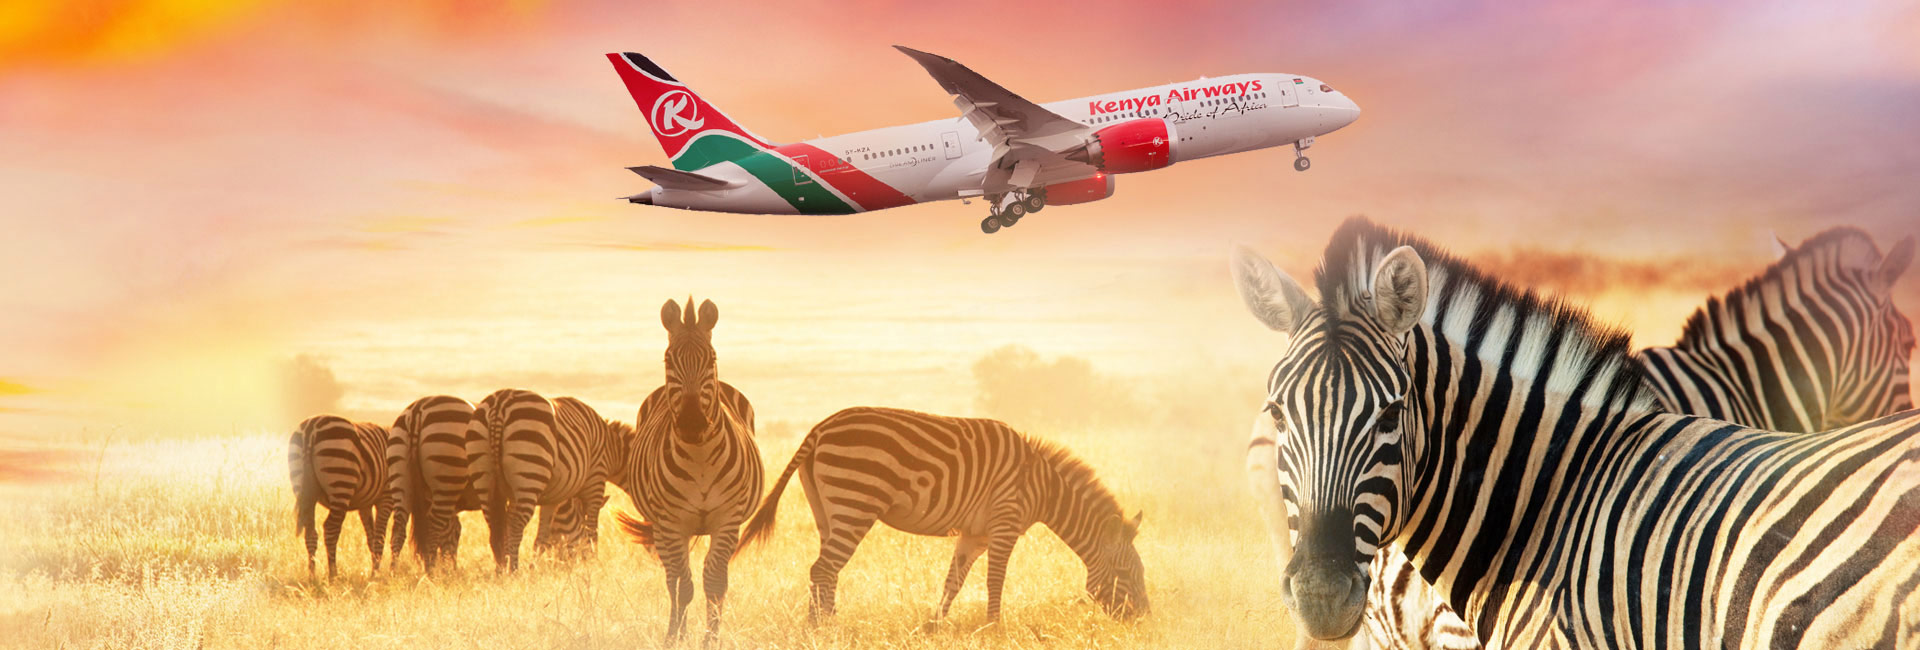 Ramco Aviation embarks on its African Safari